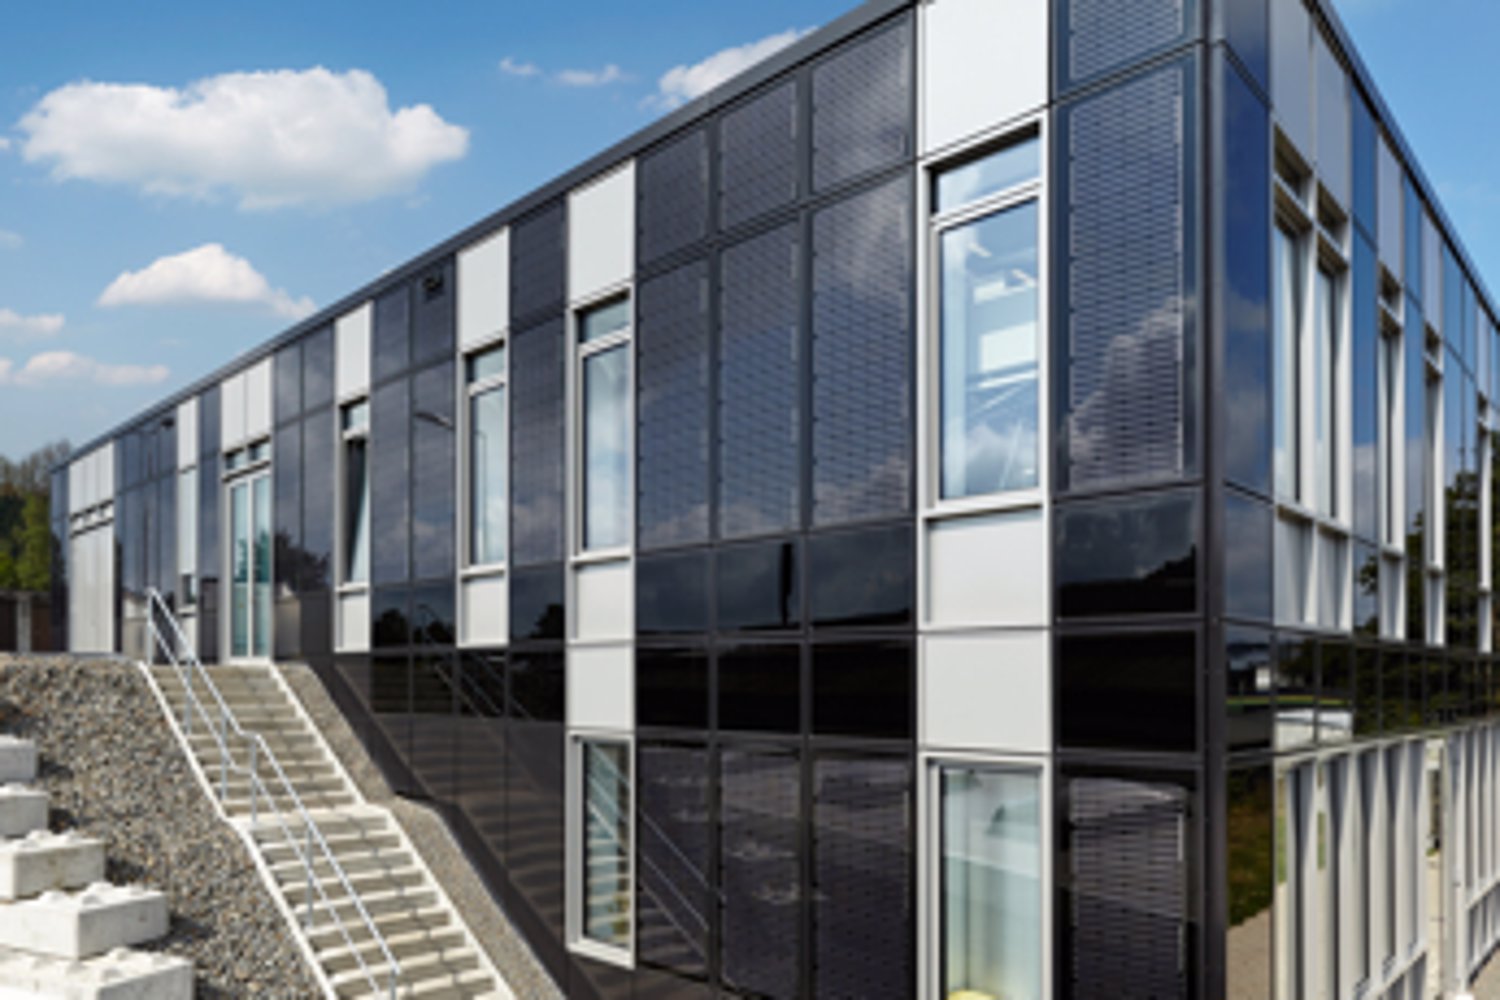 Fasada w stylu high-tech – laboratorium Grupy Otto Fuchs